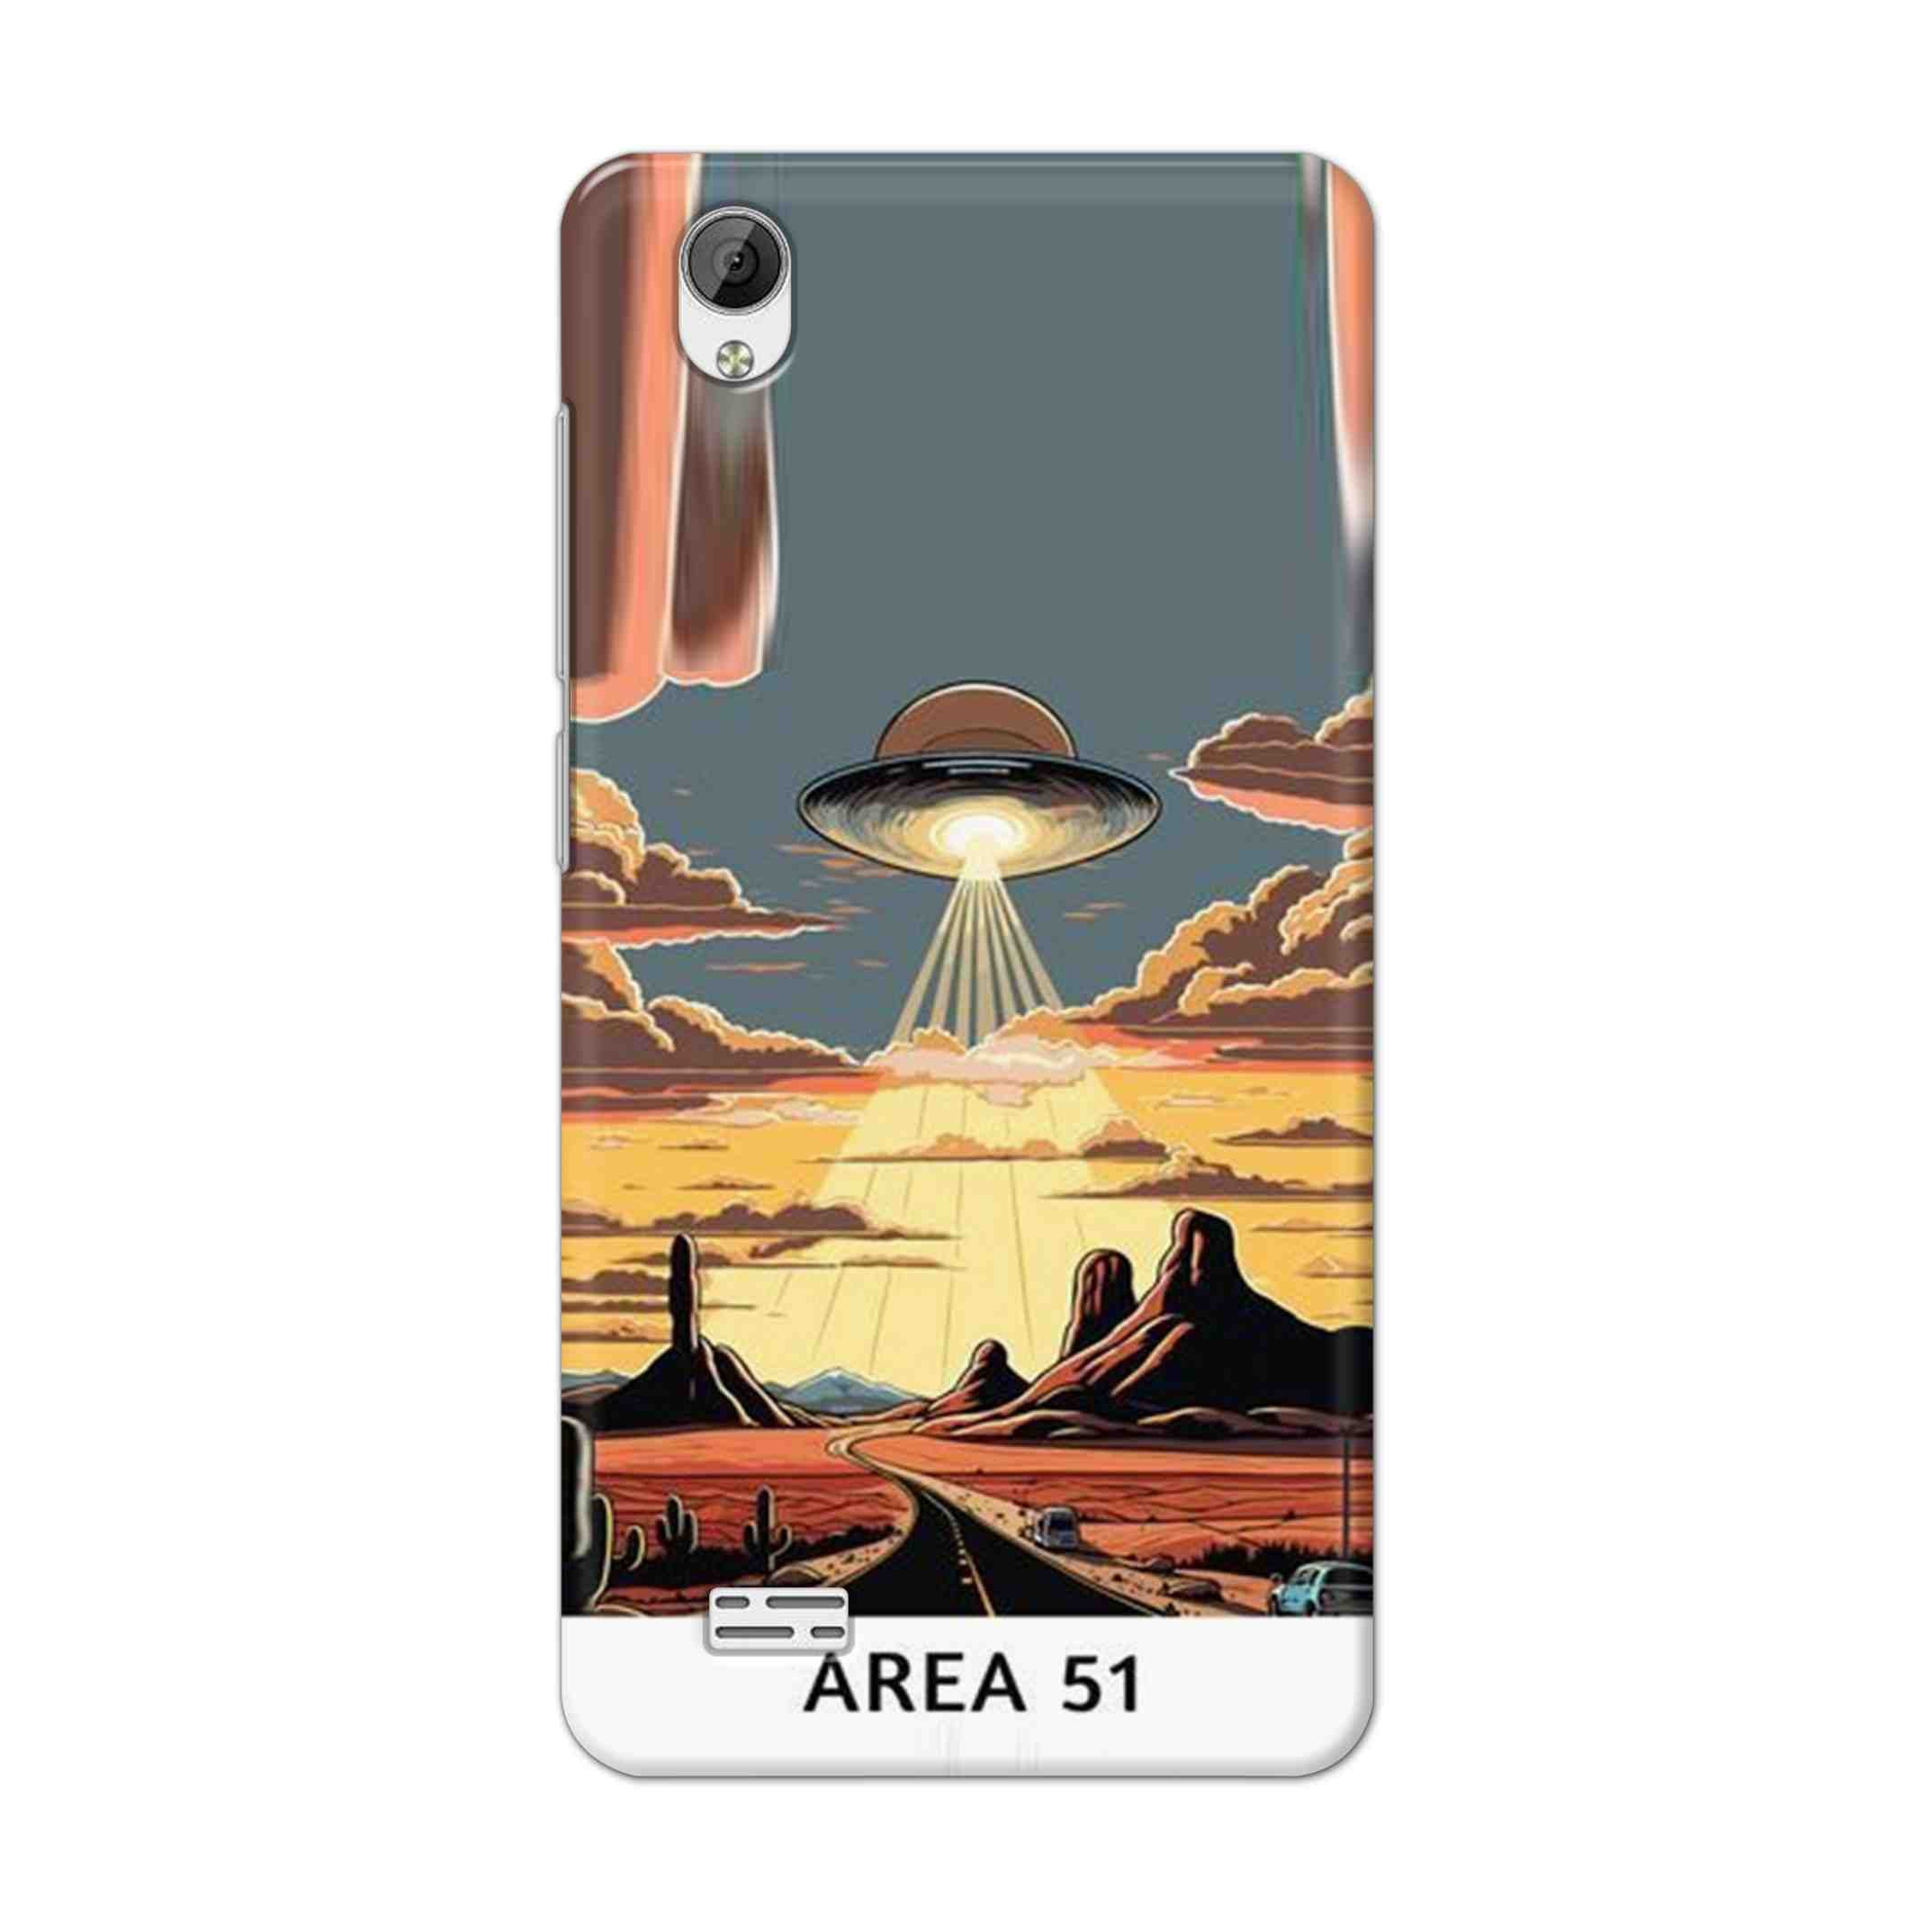 Buy Area 51 Hard Back Mobile Phone Case Cover For Vivo Y31 Online